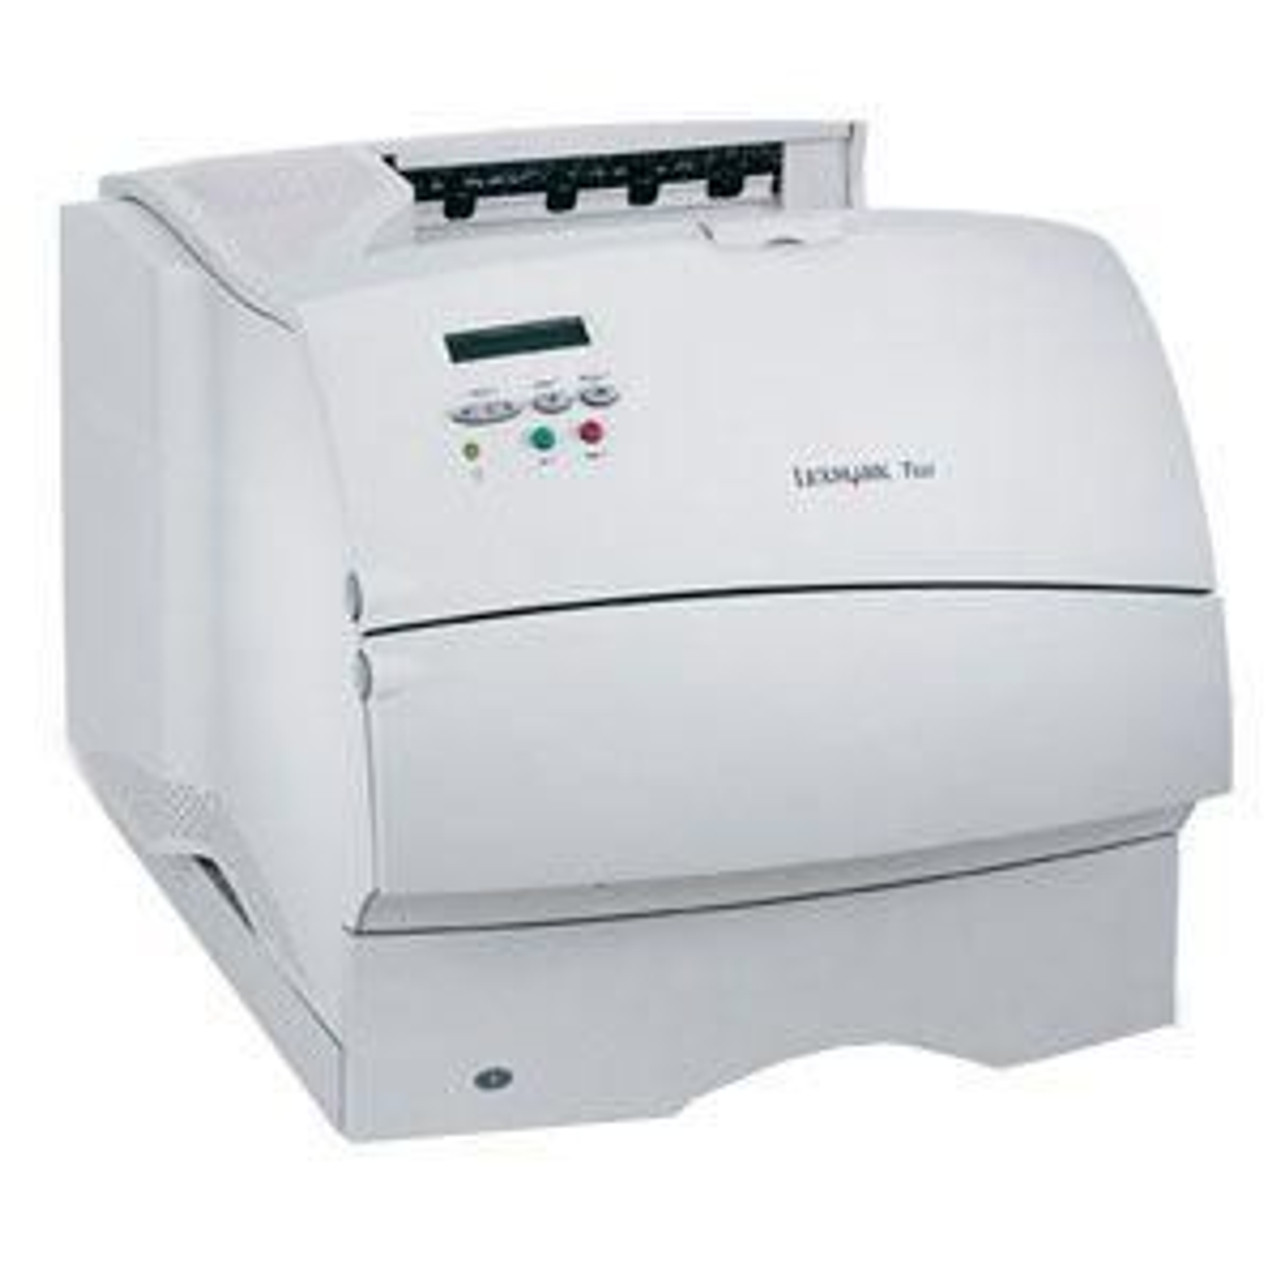 09H0200 Lexmark T522 Laser Printer Monochrome 25 ppm Mo